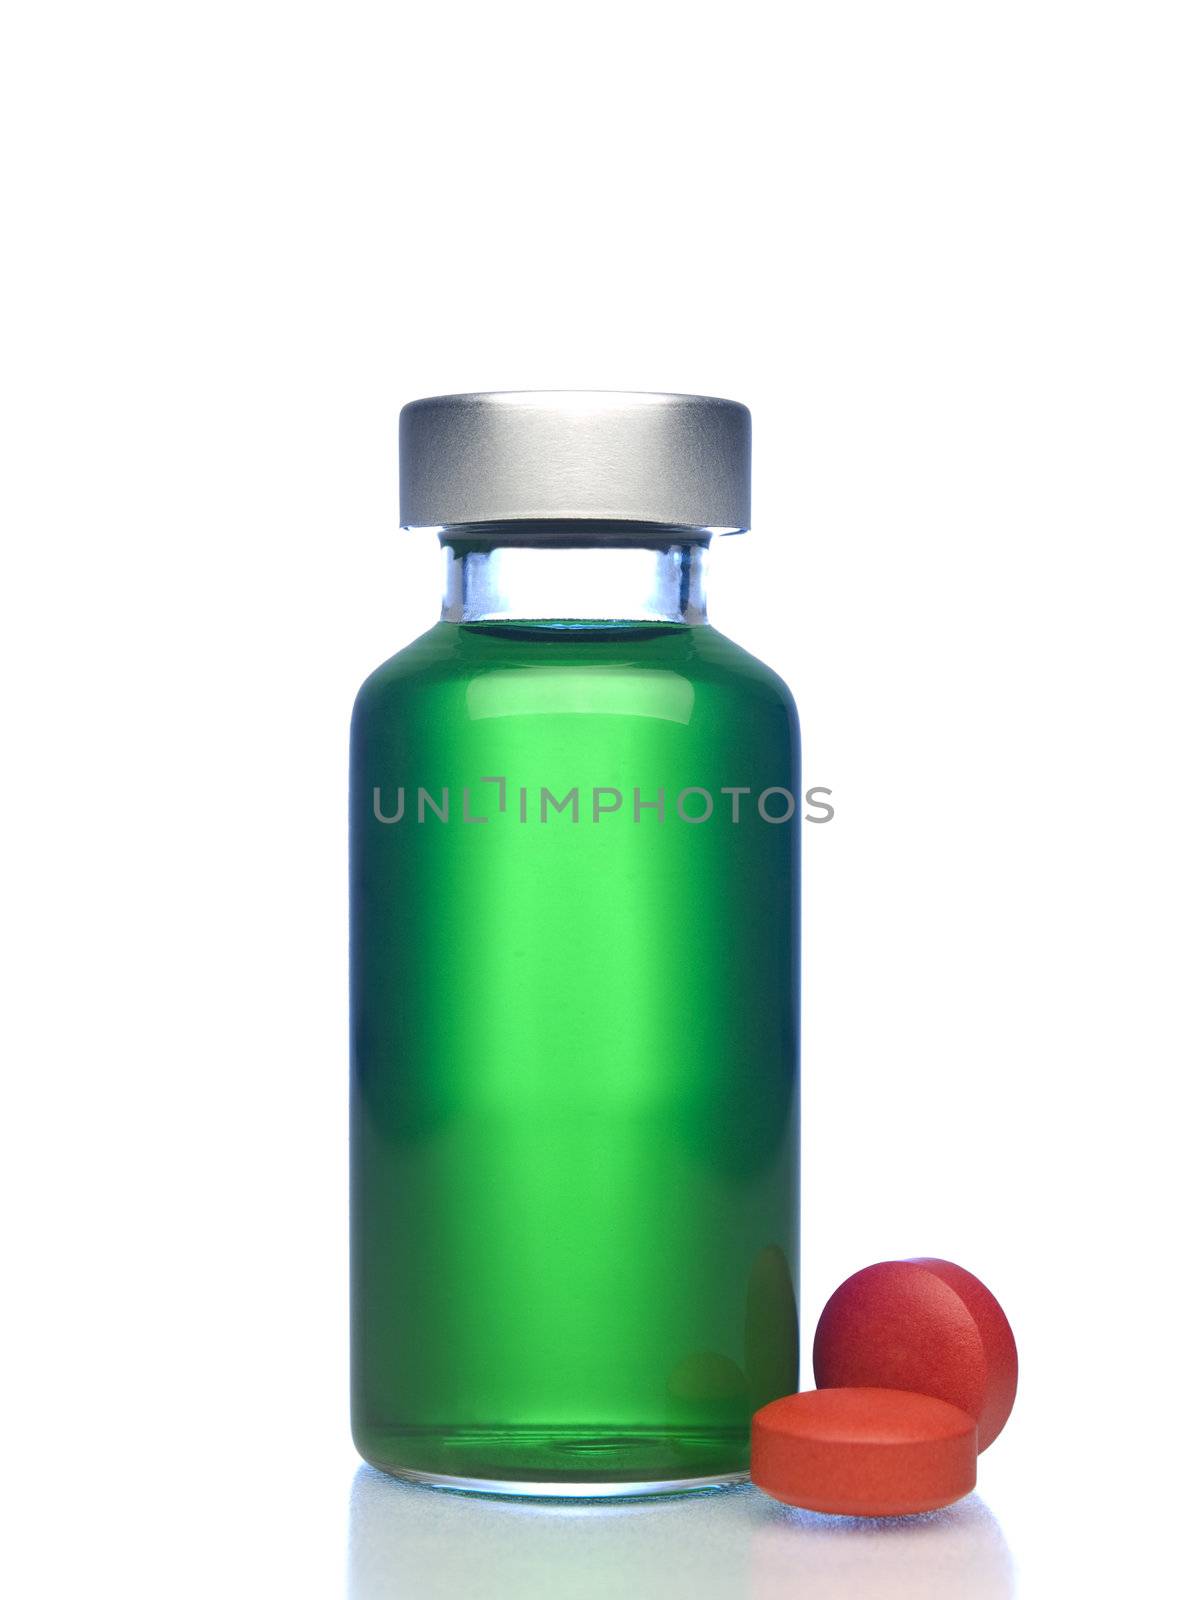 Isolated vial full of green liquid, red pills aside.